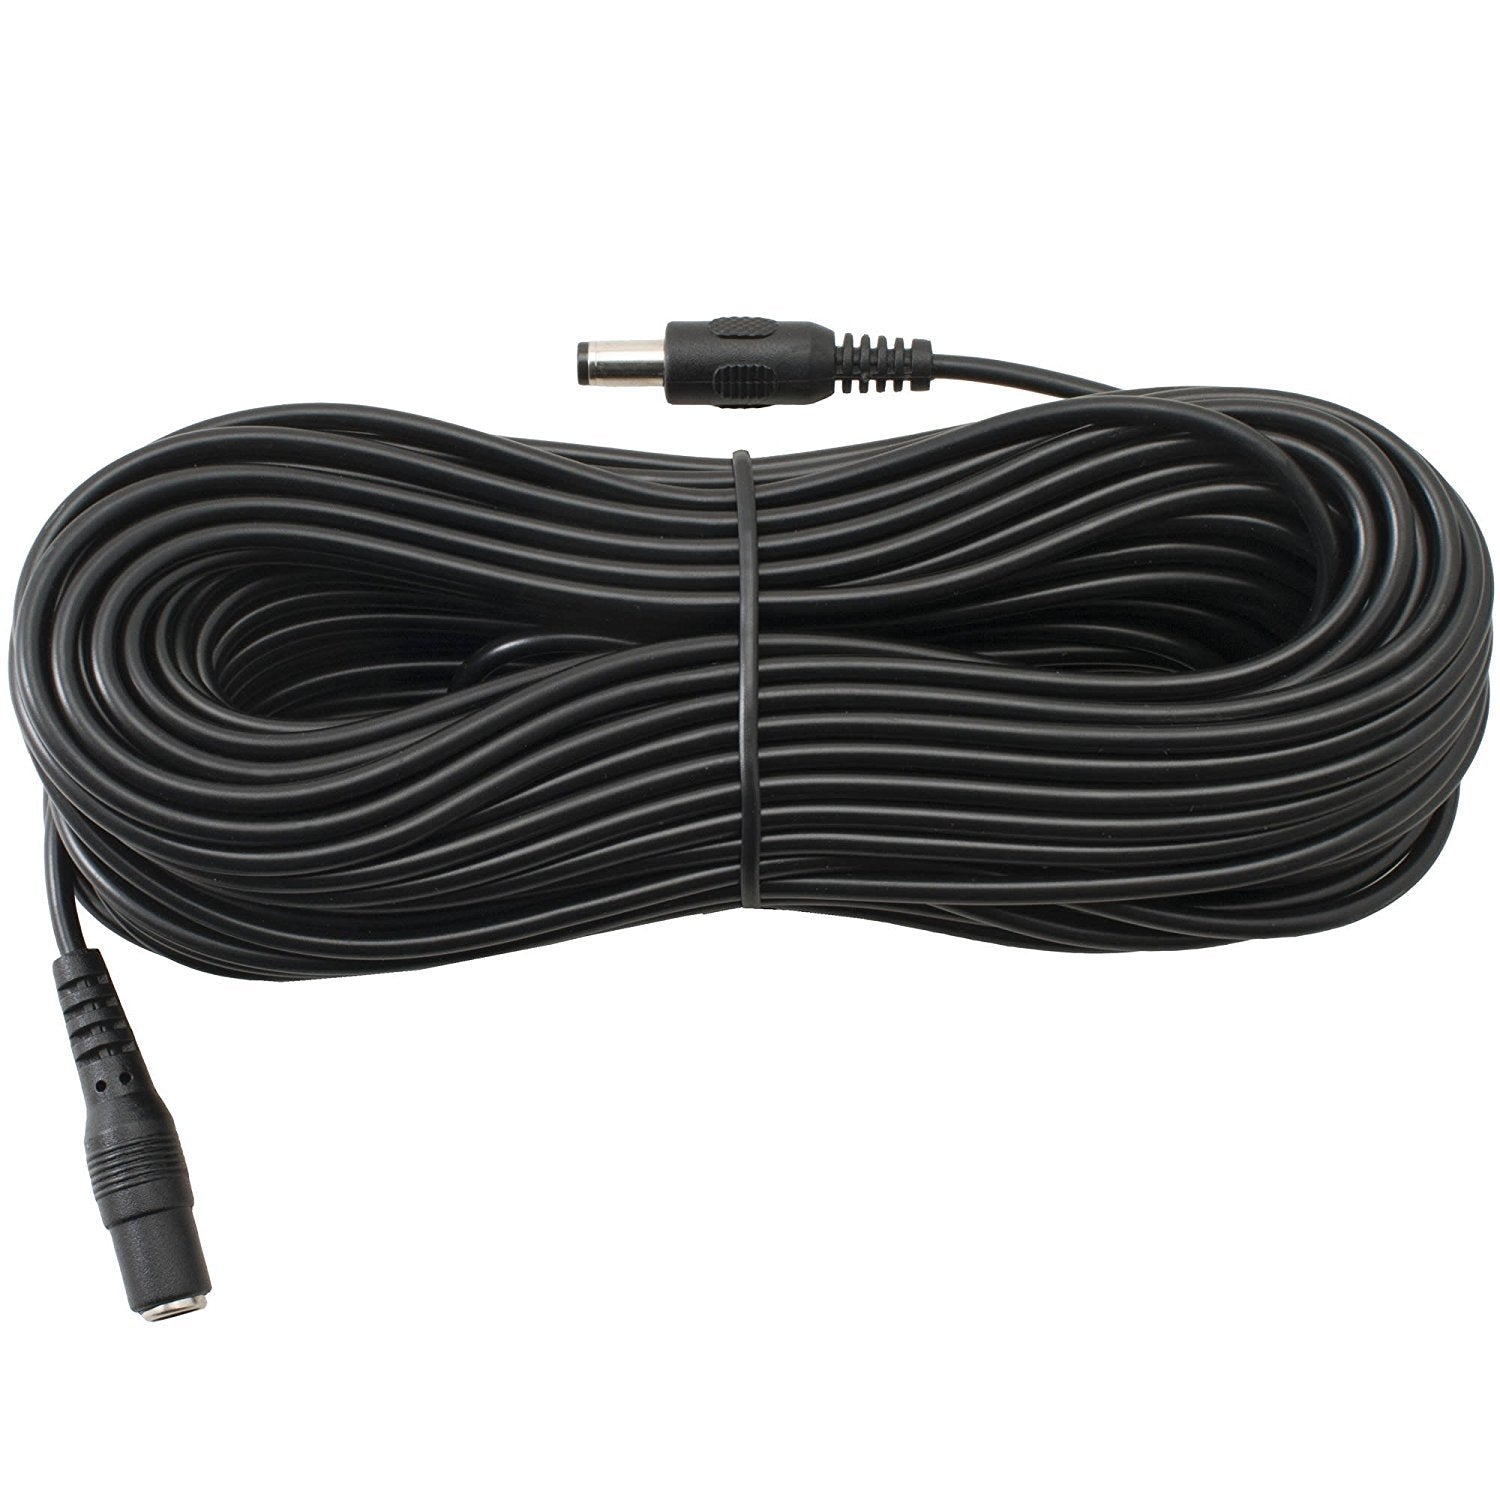 Smedz 10M DC Power Extension Cable,Black